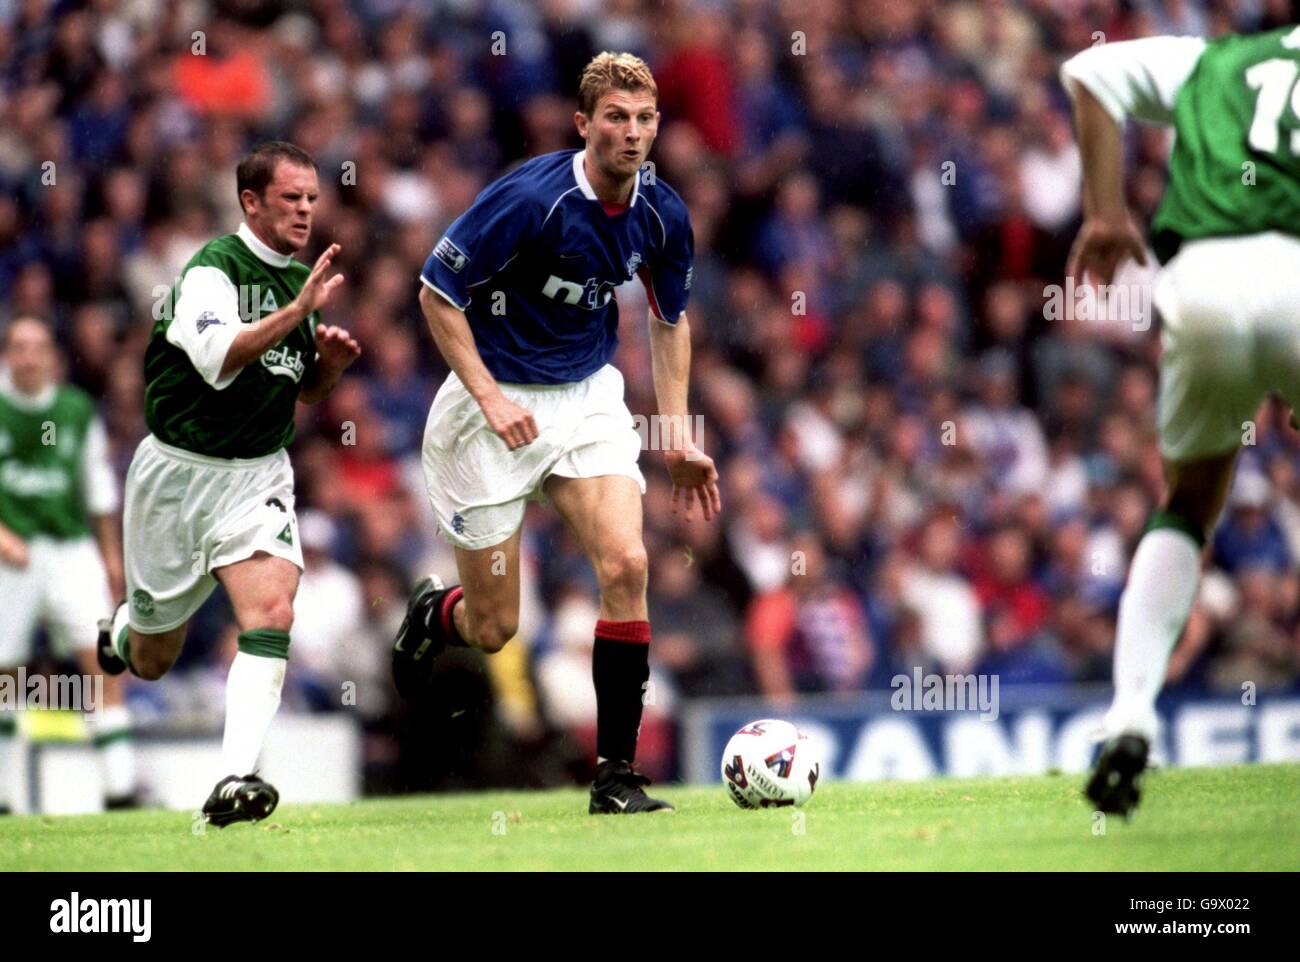 Scottish Soccer - Bank of Scotland Premier League - Rangers v Hibernian. Rangers' Tore Andre Flo (r) gets away from Hibernian's John O'Neil (l) Stock Photo